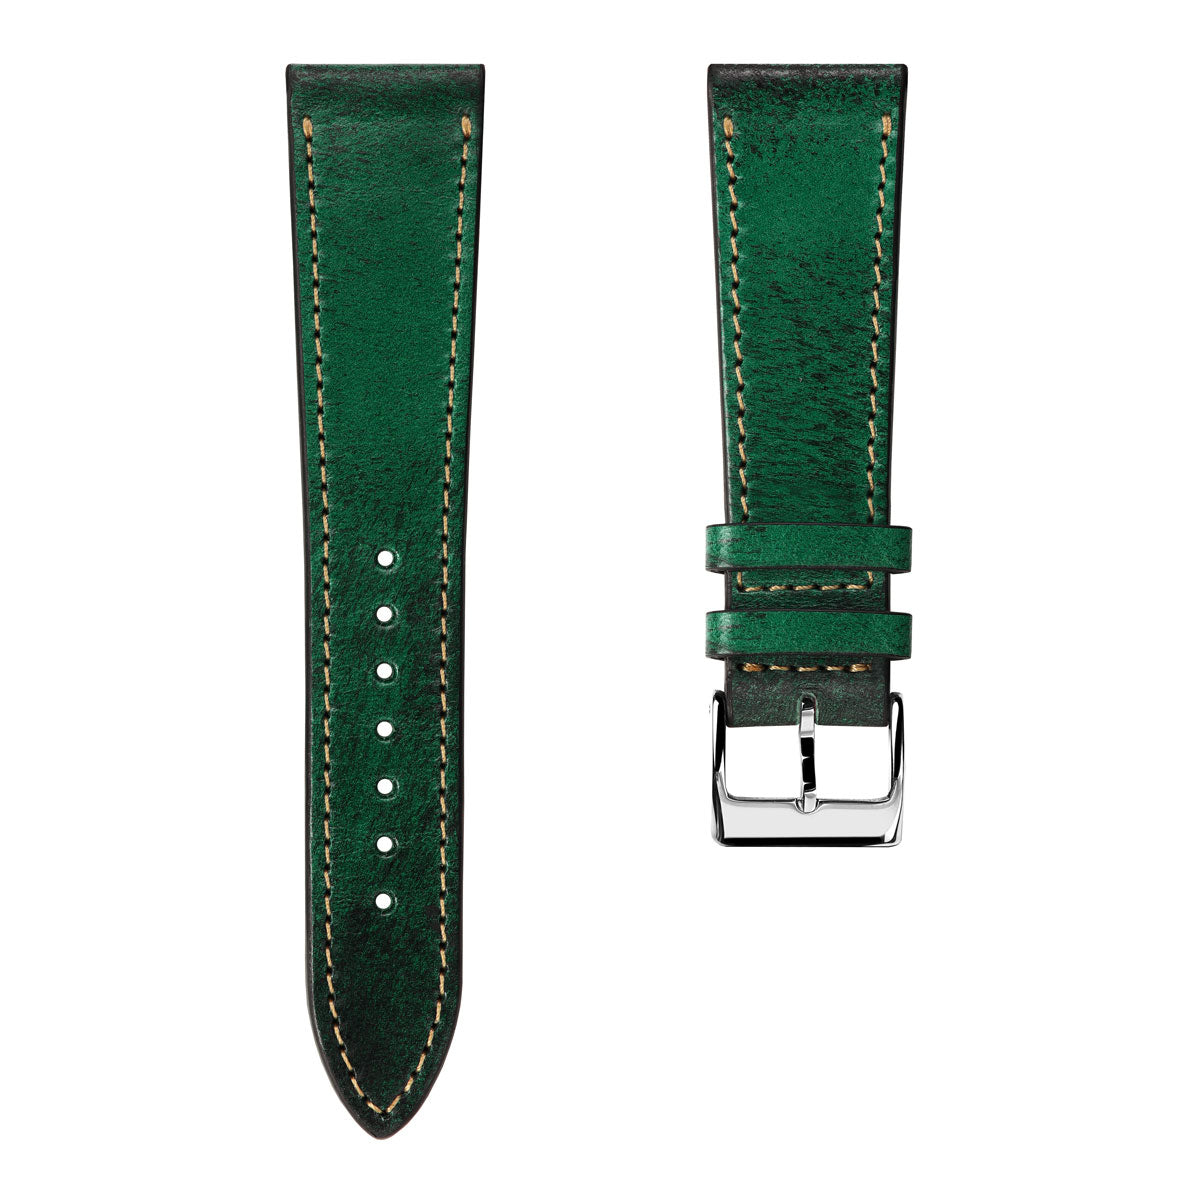 Radstock Vintage Genuine Leather Watch Strap - Vintage Green